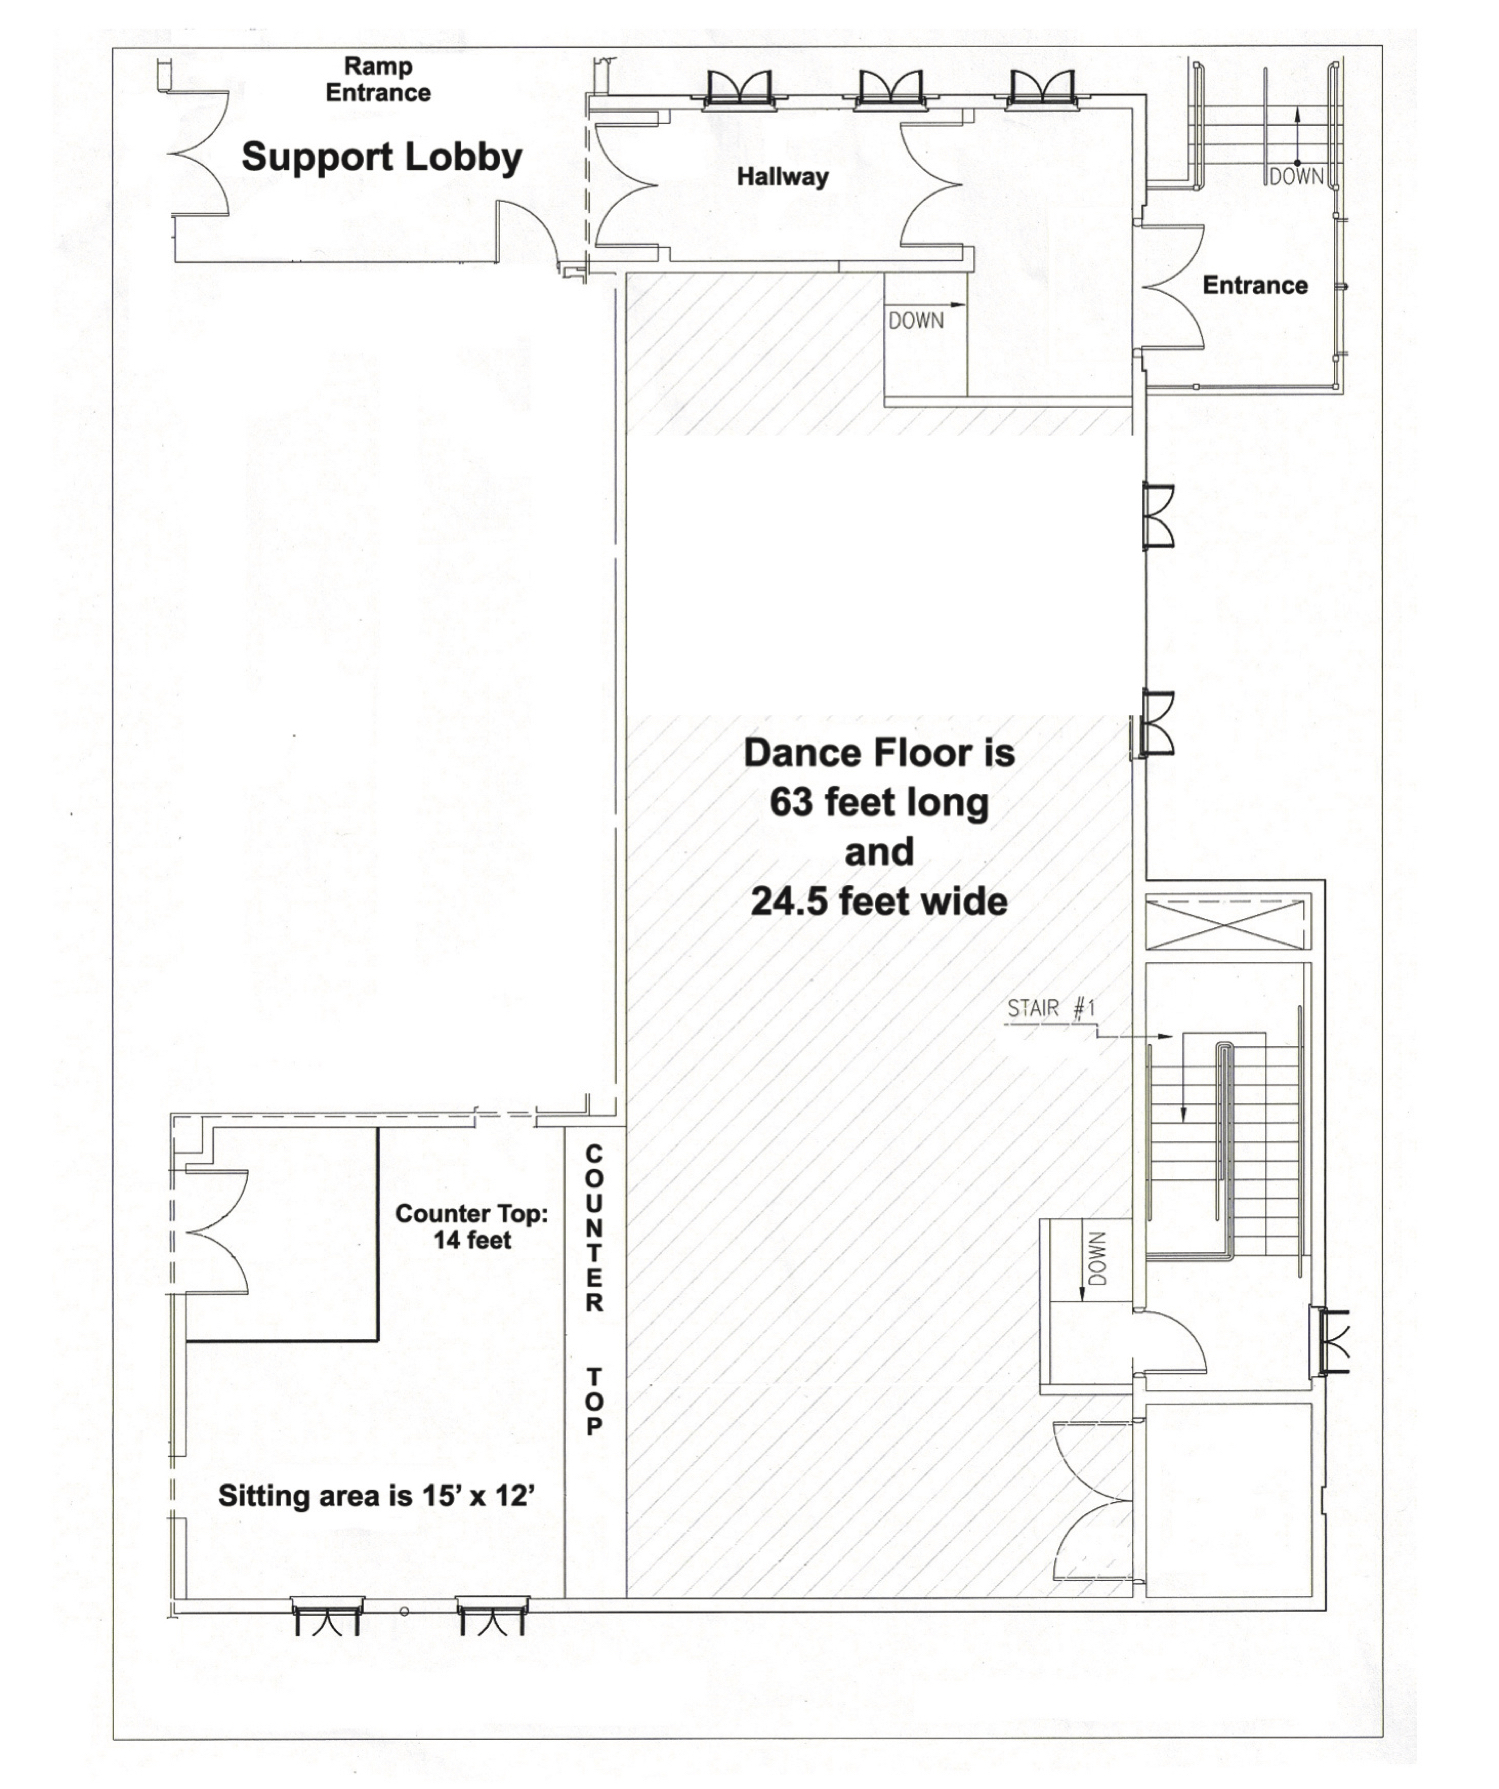 venue floor plan for Ballroom Back Room